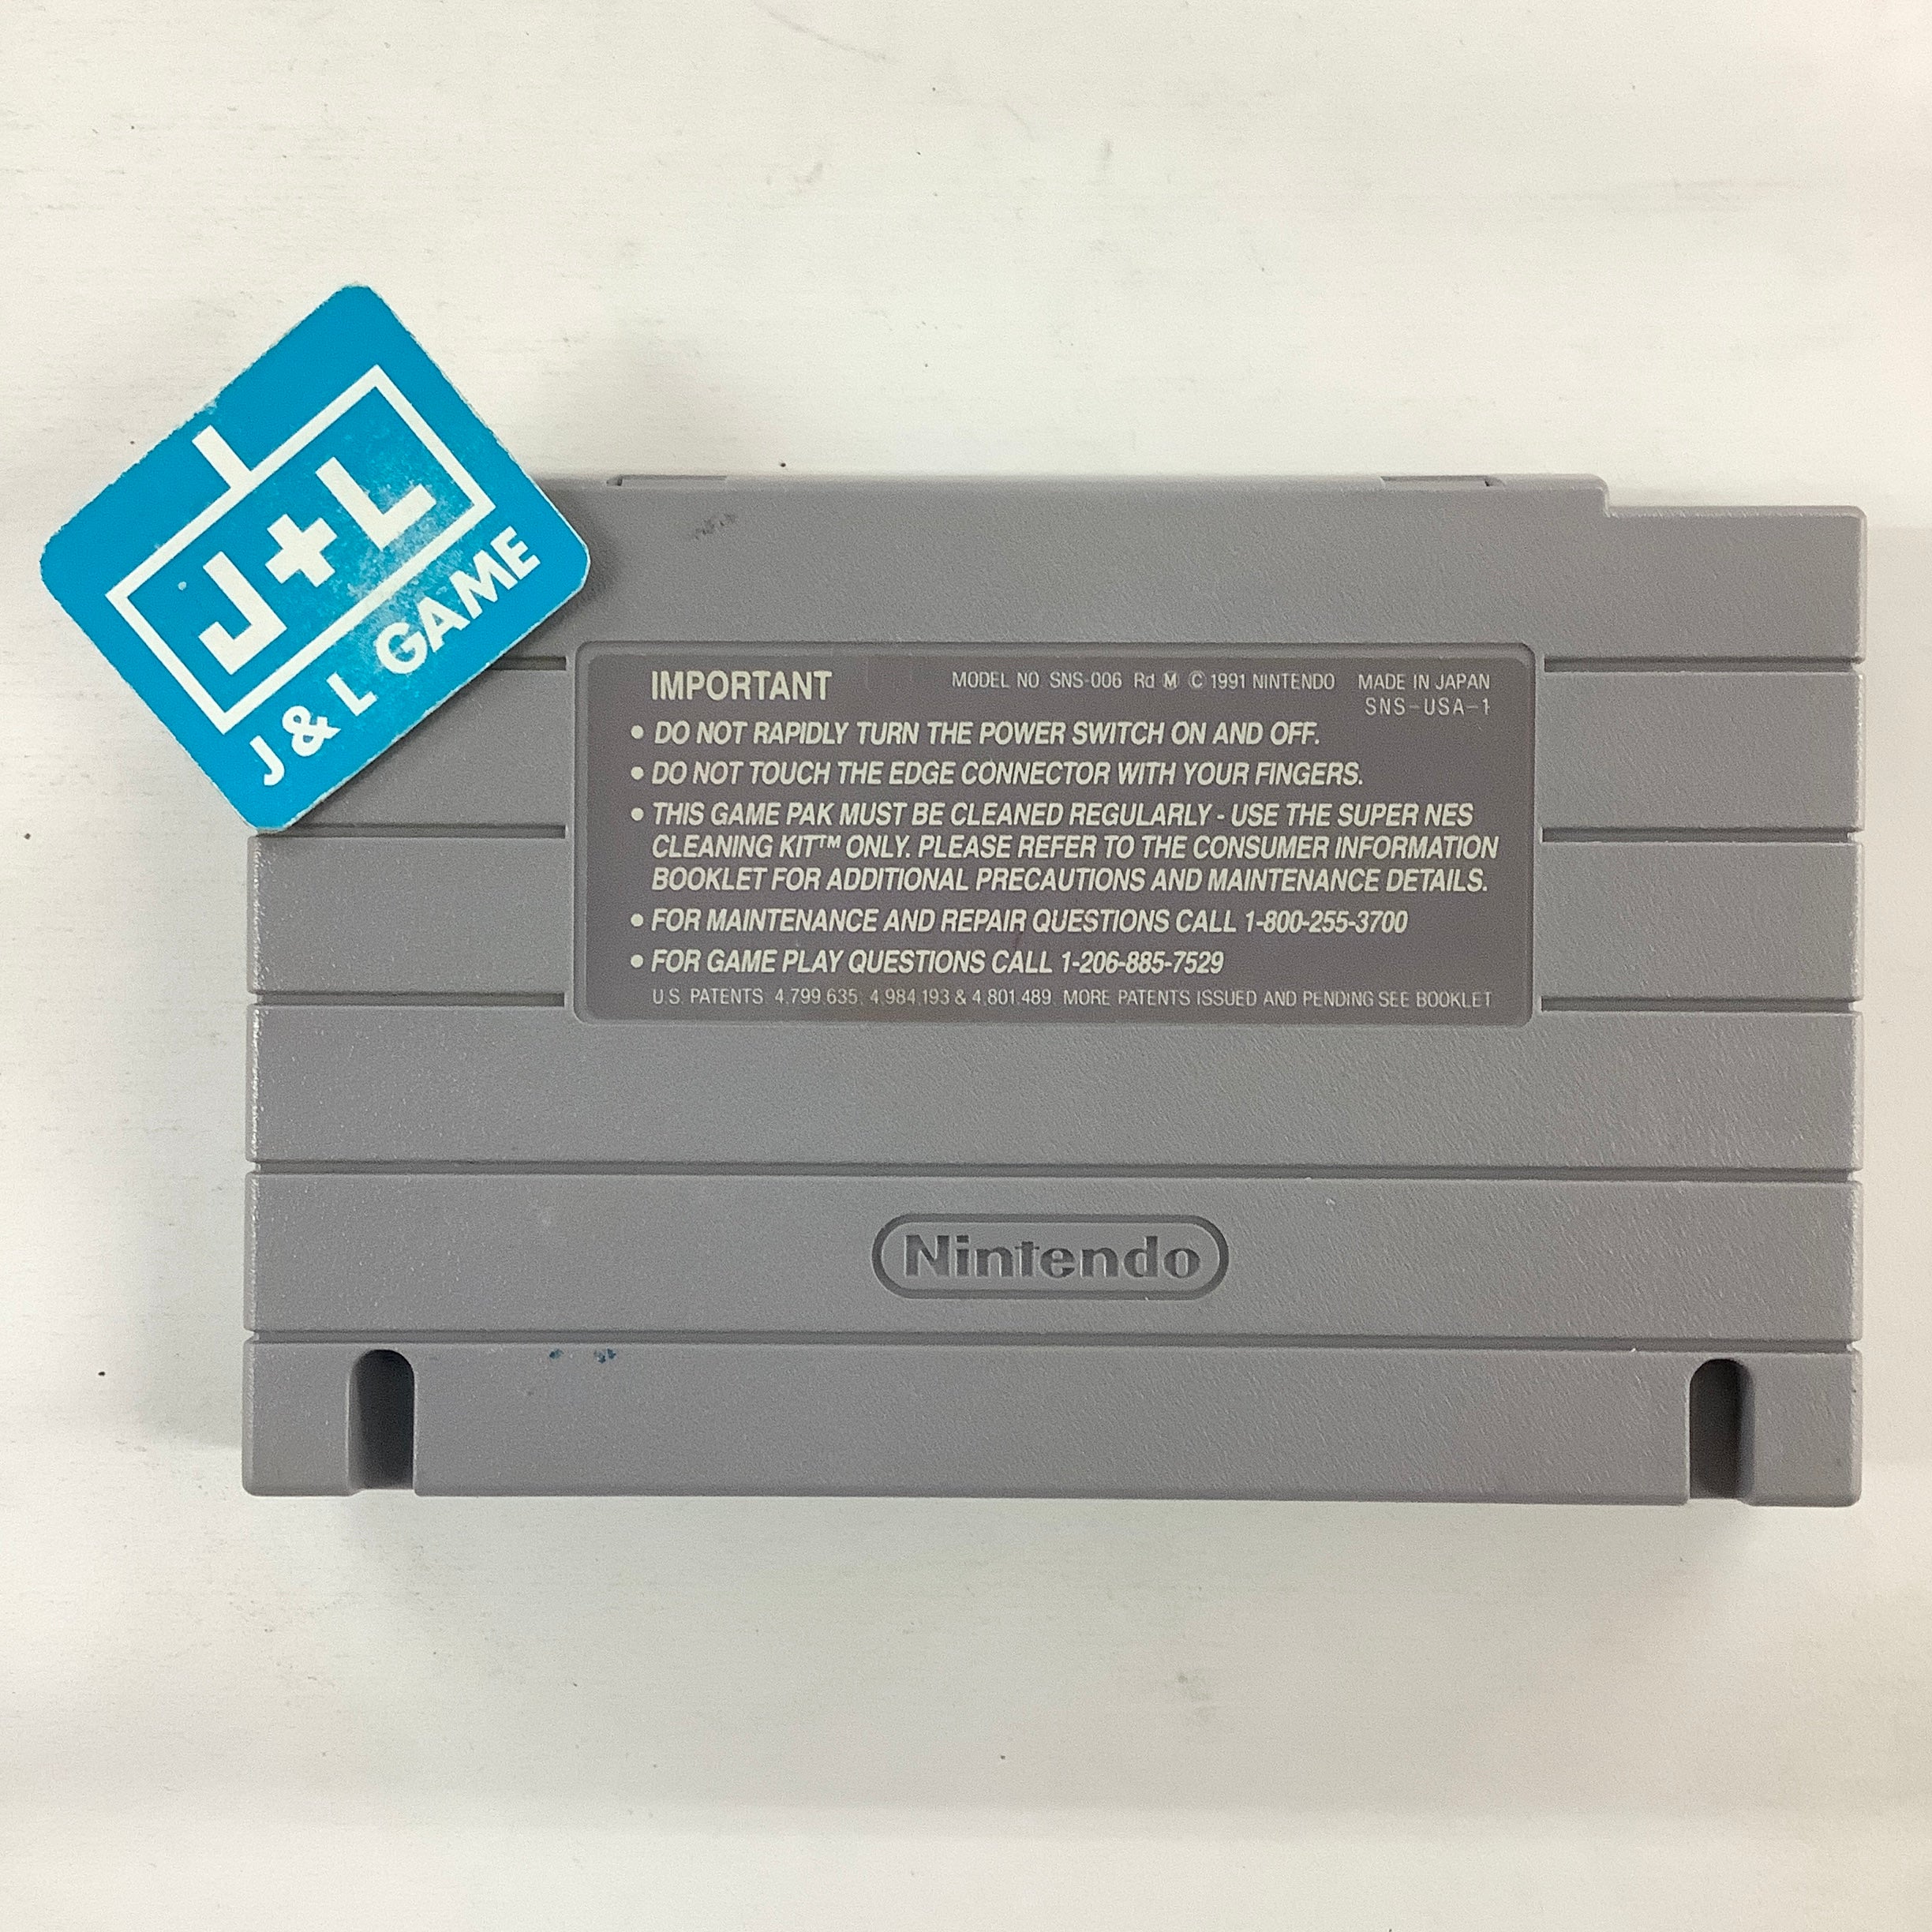 Wordtris - (SNES) Super Nintendo [Pre-Owned] Video Games Spectrum Holobyte   